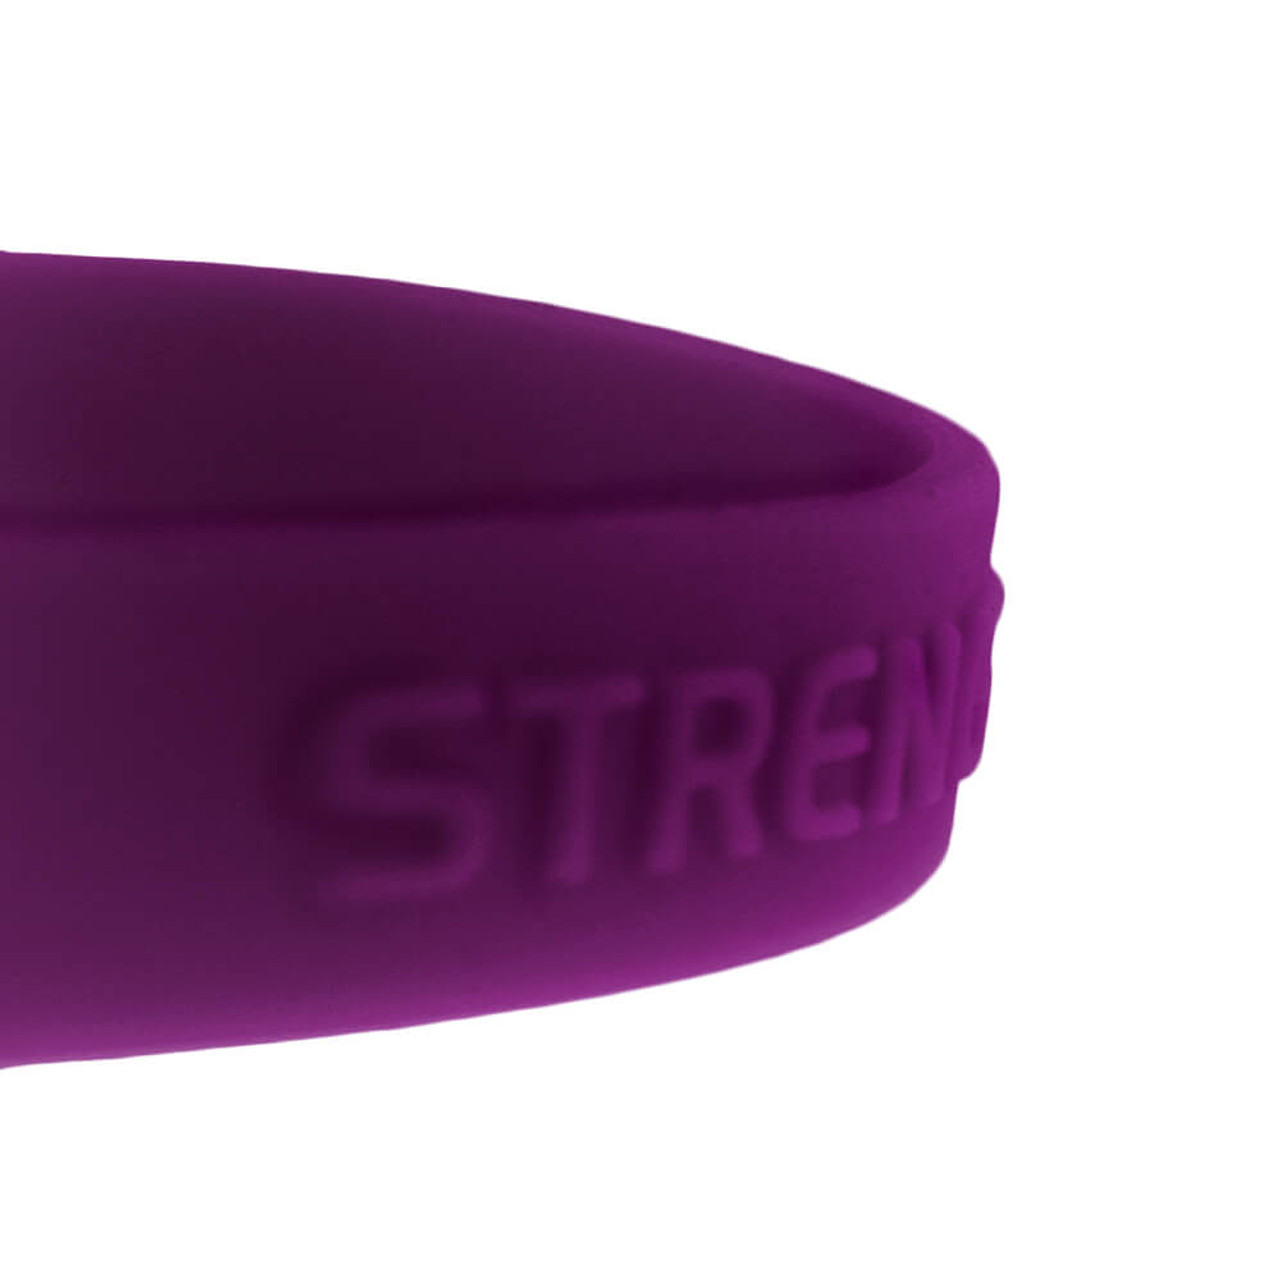 PinMart's Purple Domestic Violence Awareness Rubber Bracelet 